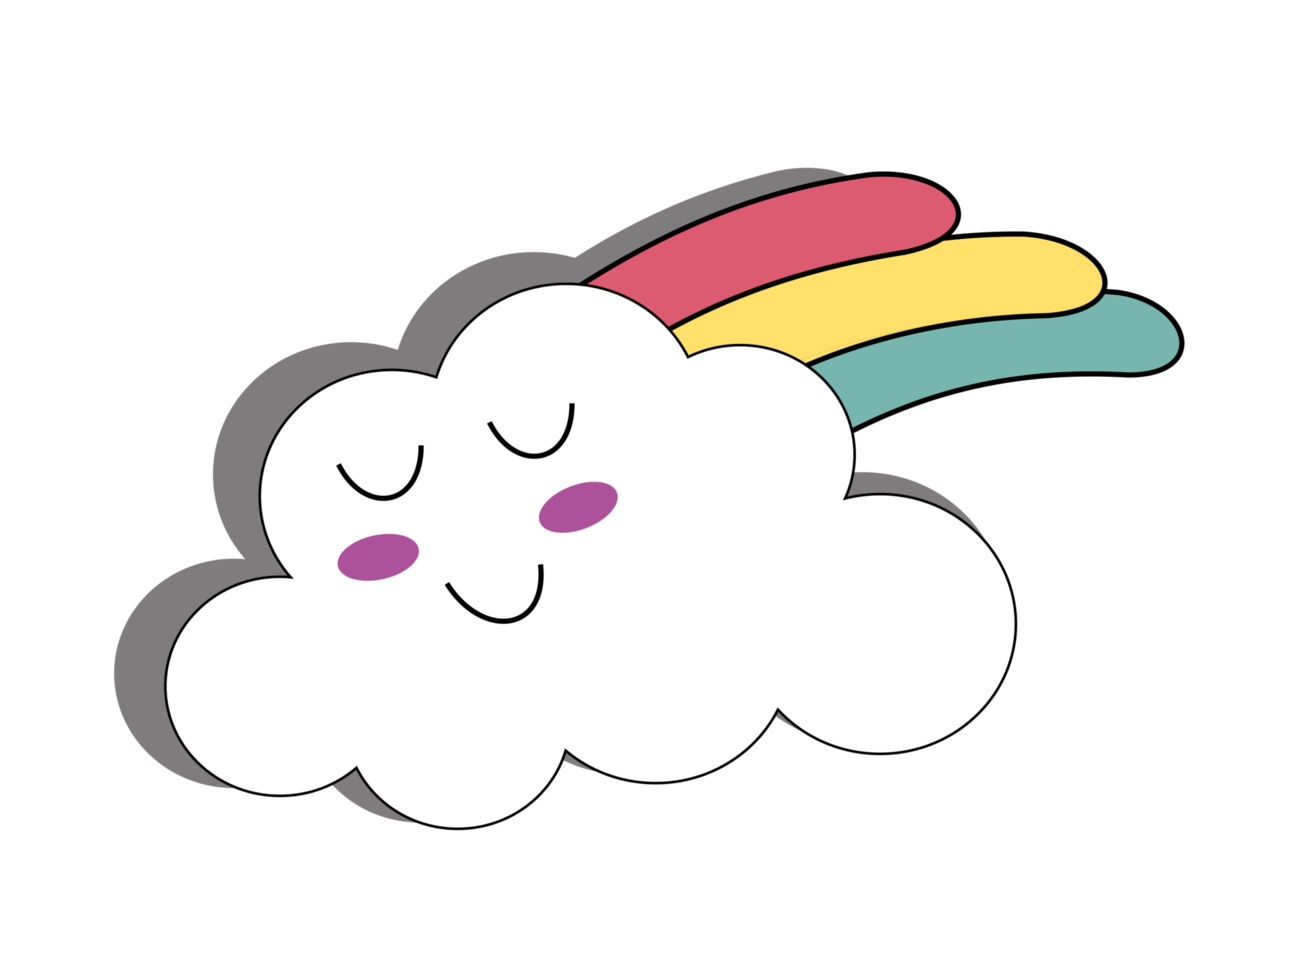 Cute clouds. Cute cloud cartoon. Suitable for design on children's books or children's knick-knacks. Cloud design elements. png format